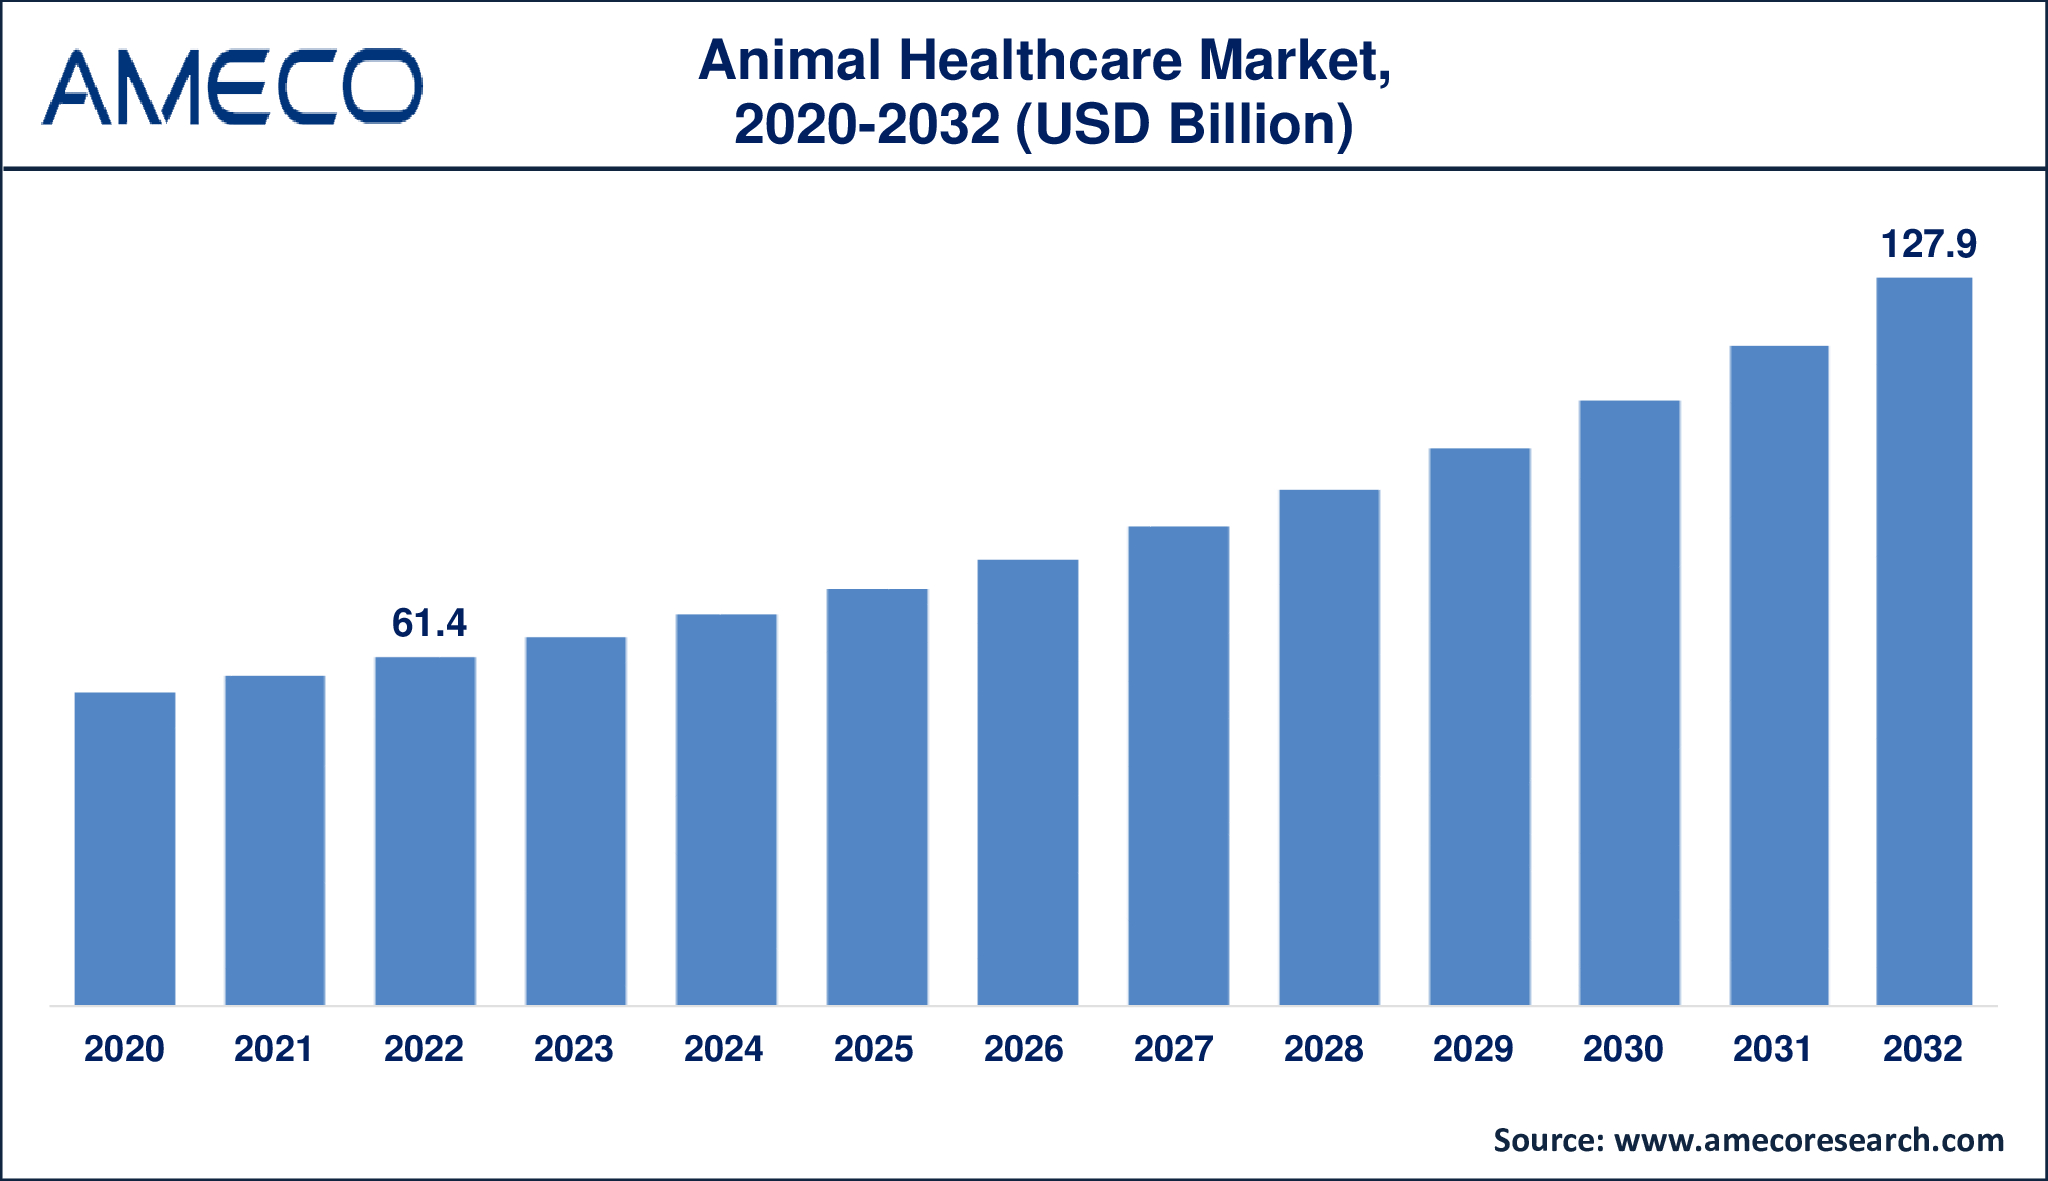 Animal Healthcare Market Dynamics